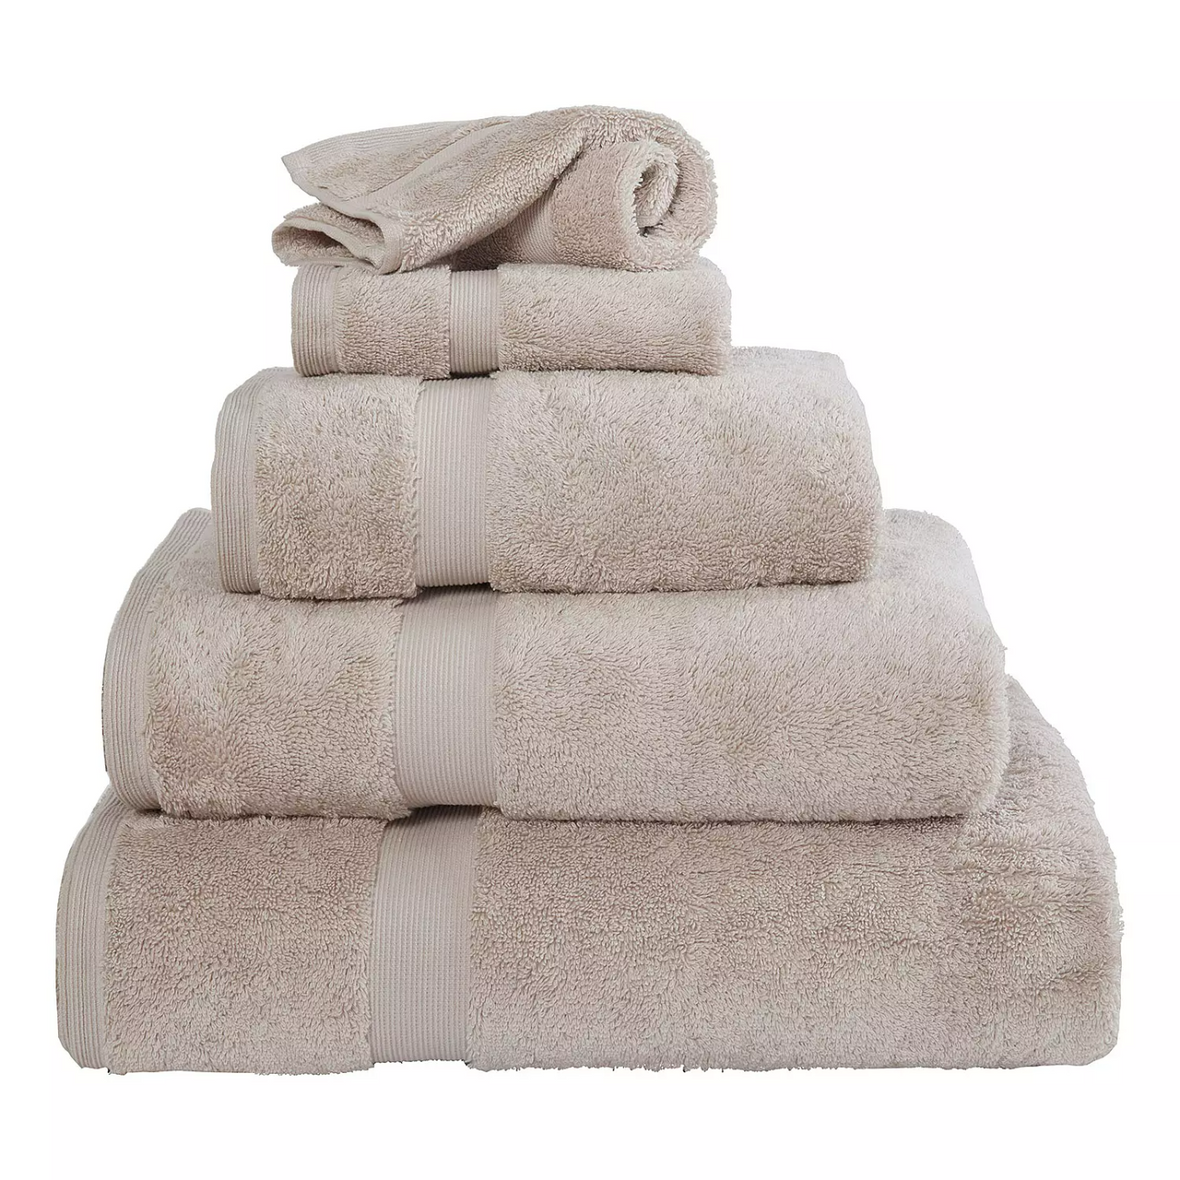 Linen Consultancy Bath Towel - Natural